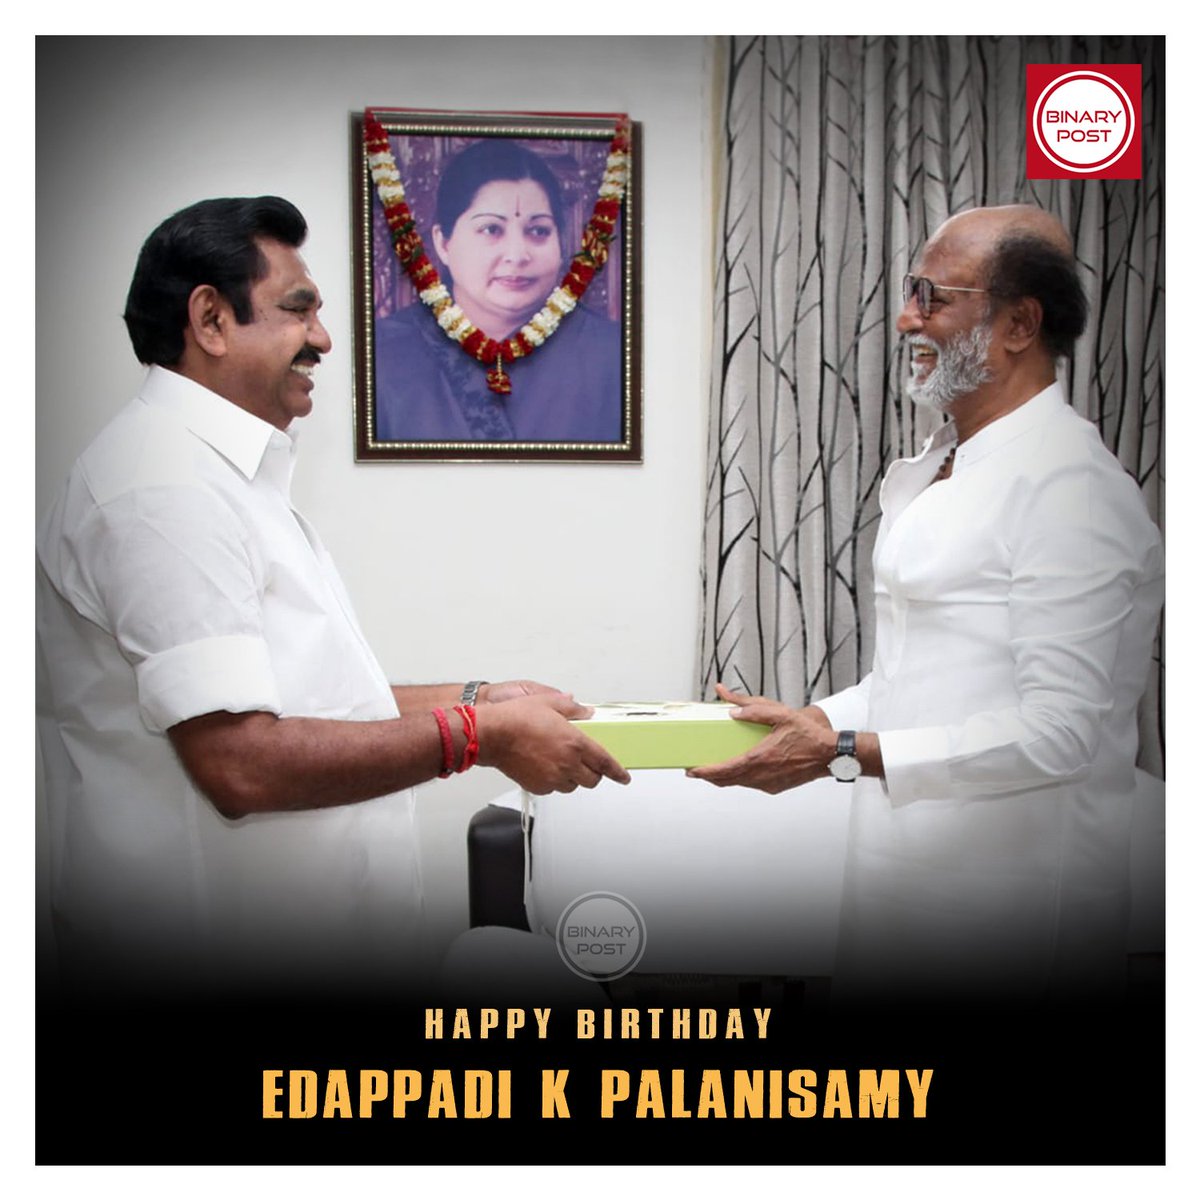 Happy Birthday @EPSTamilNadu ...

#Thalaivar 🤘 #Superstar #Rajinikanth #EPS #HBDEPS #BinaryPost